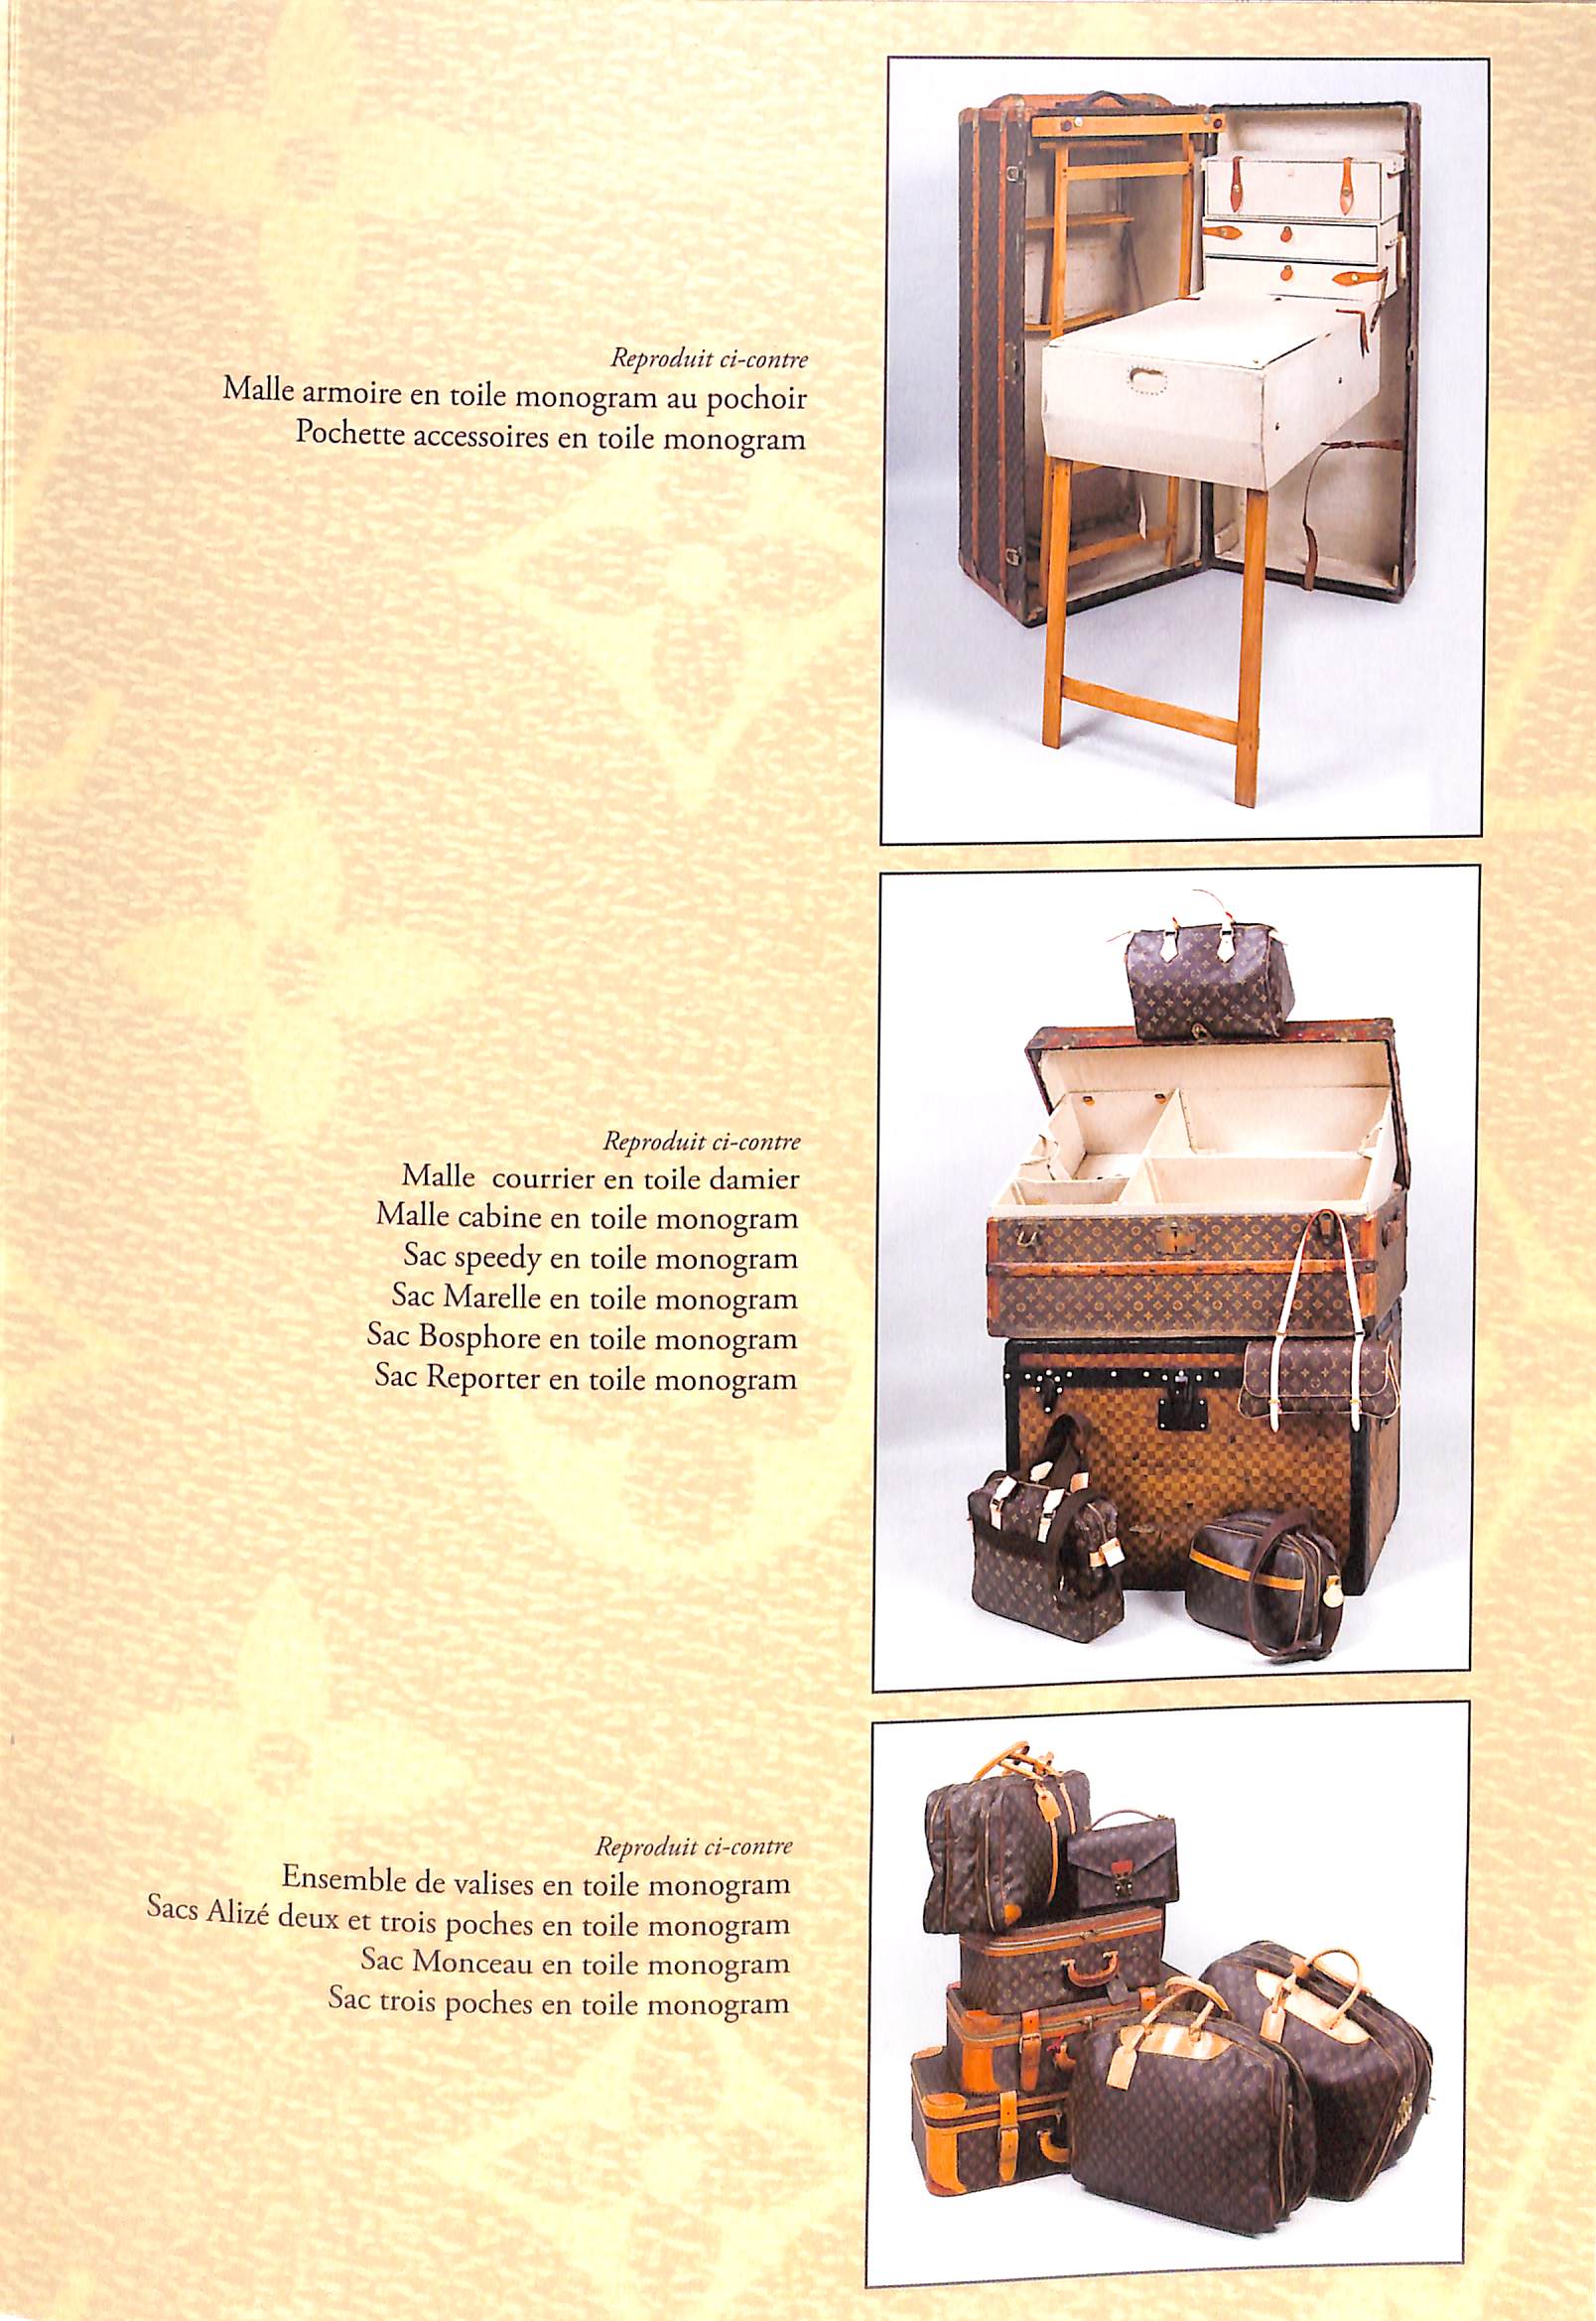 Louis Vuitton Furniture for Sale at Auction